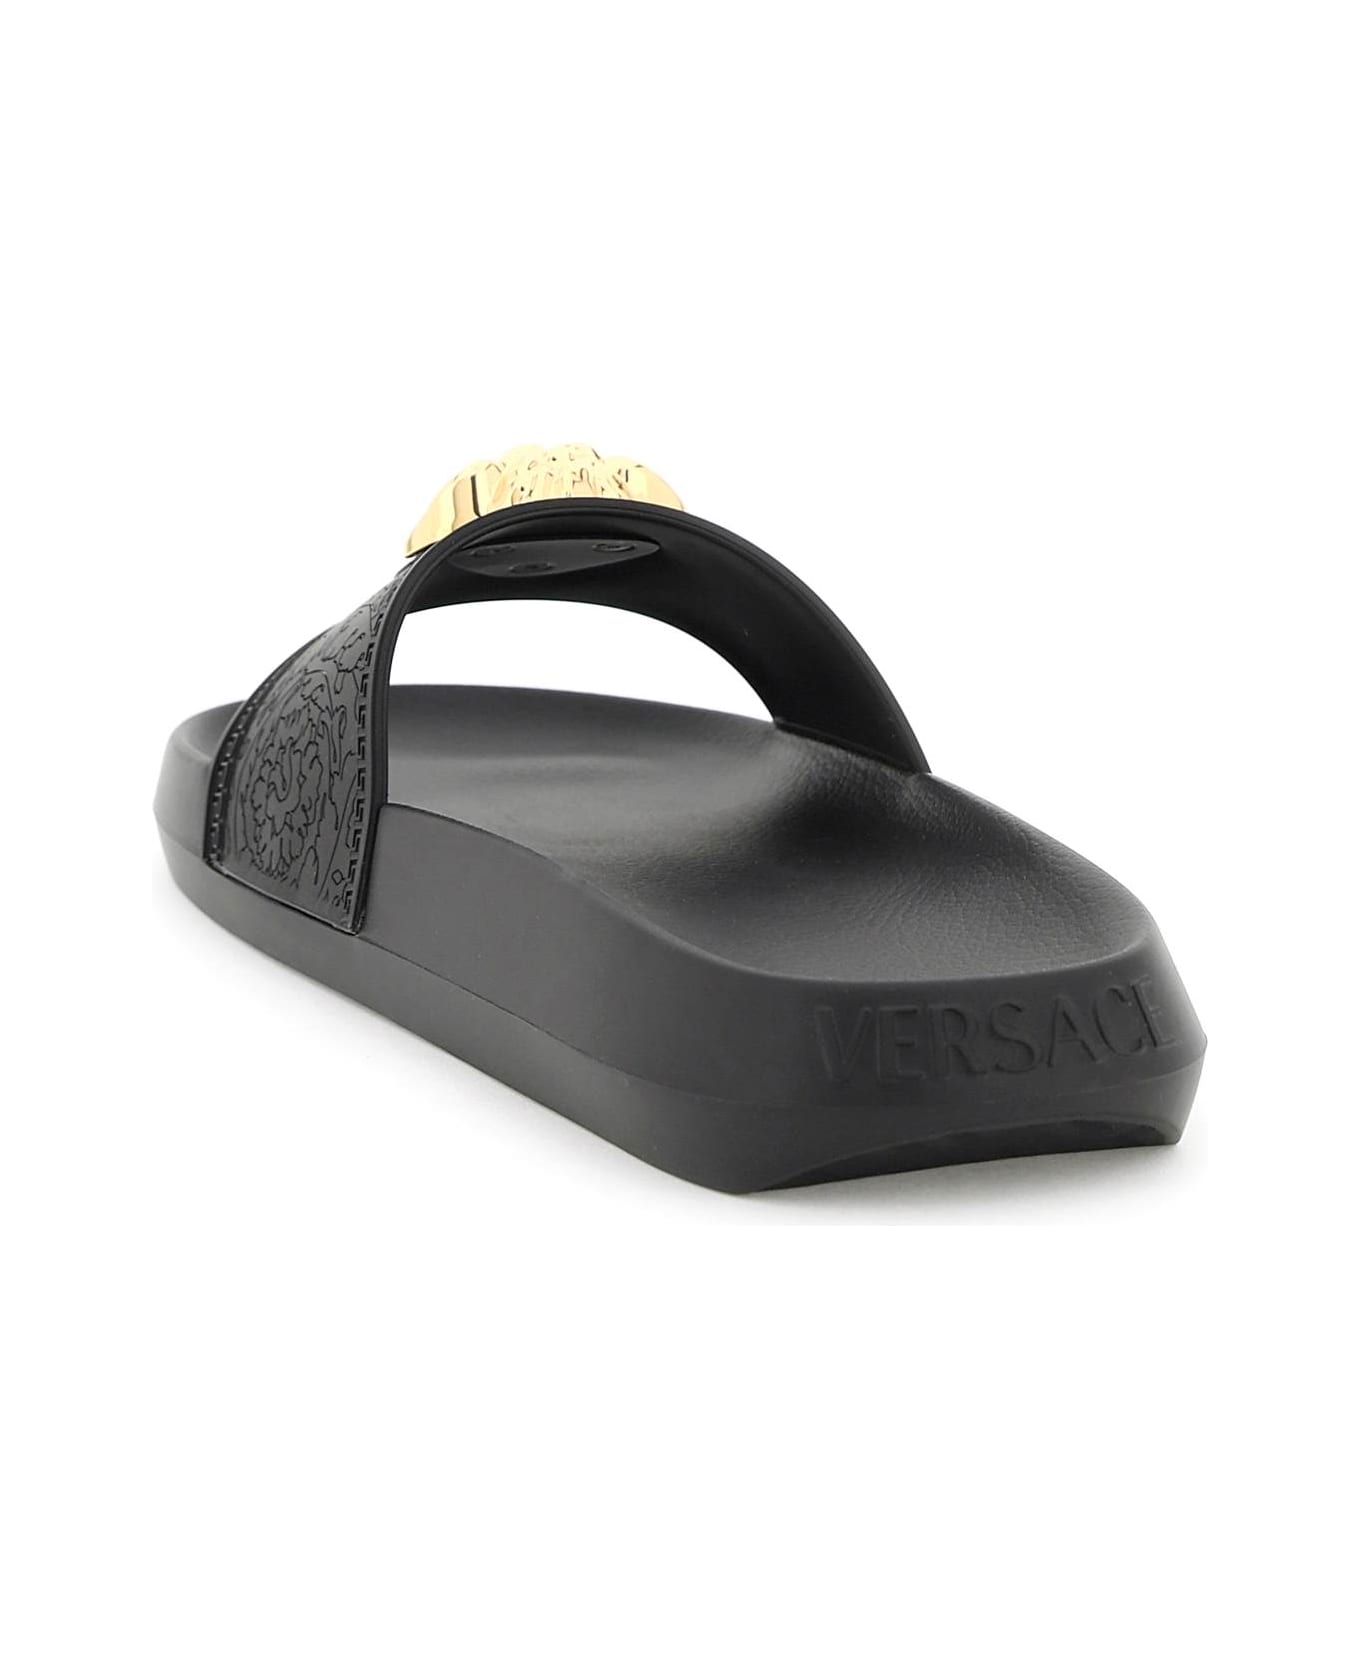 Versace 'palazzo' Rubber Slides - Black サンダル